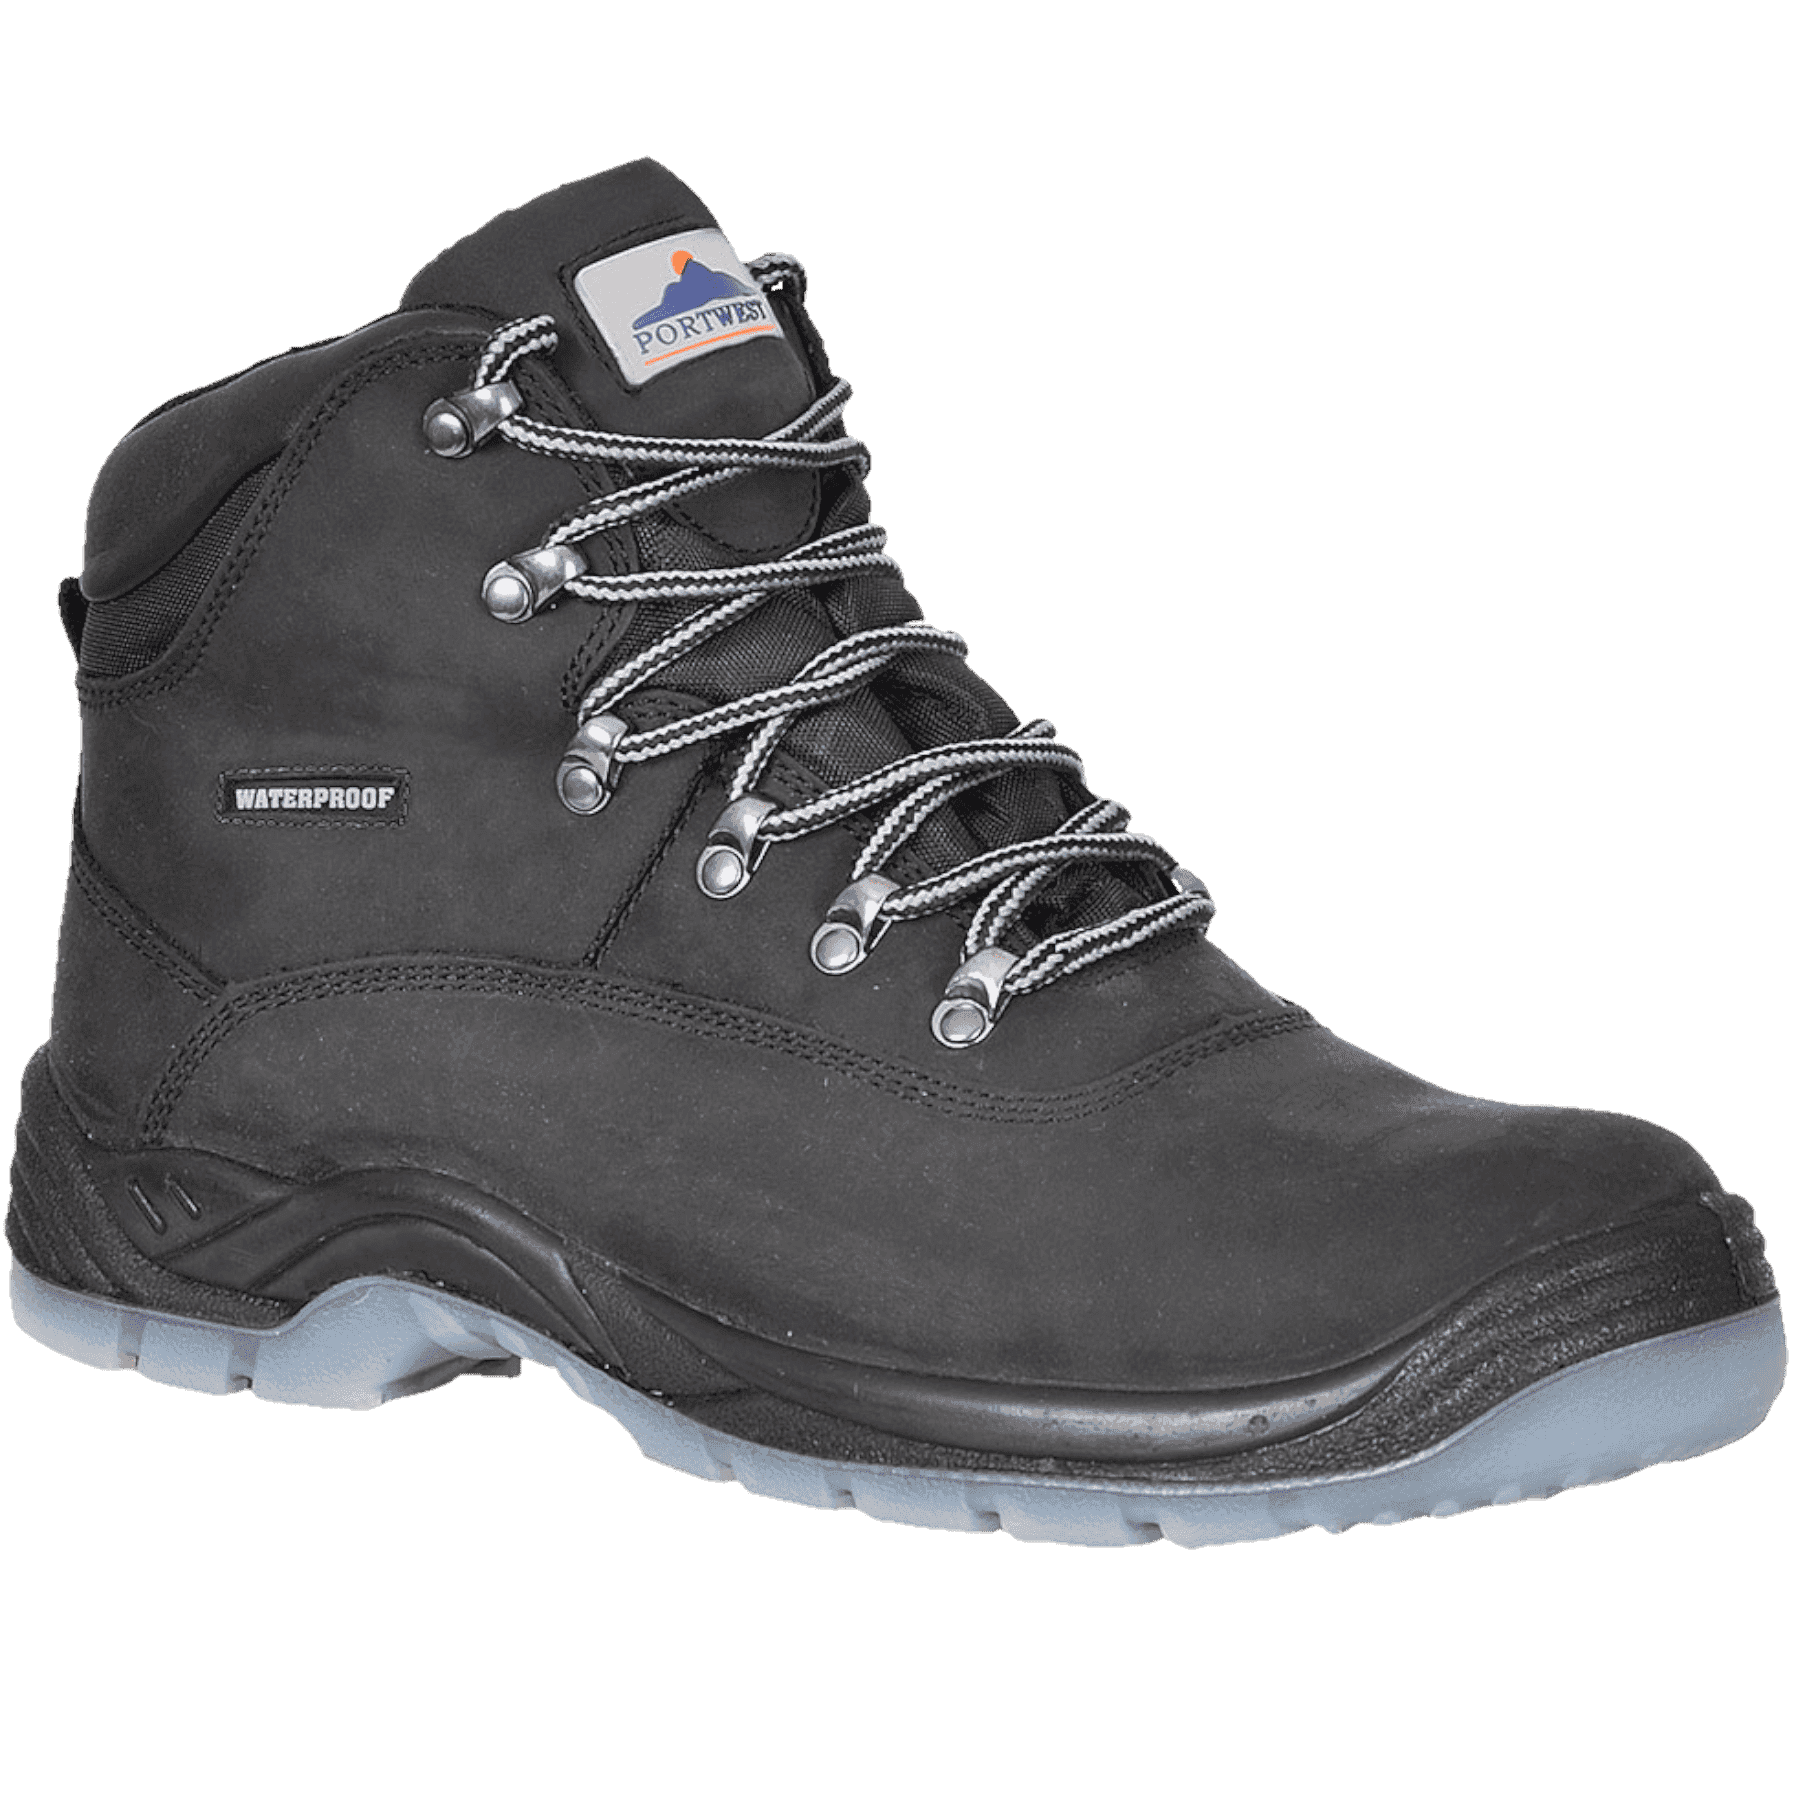 Steelite S3 Waterproof Safety Boots WR